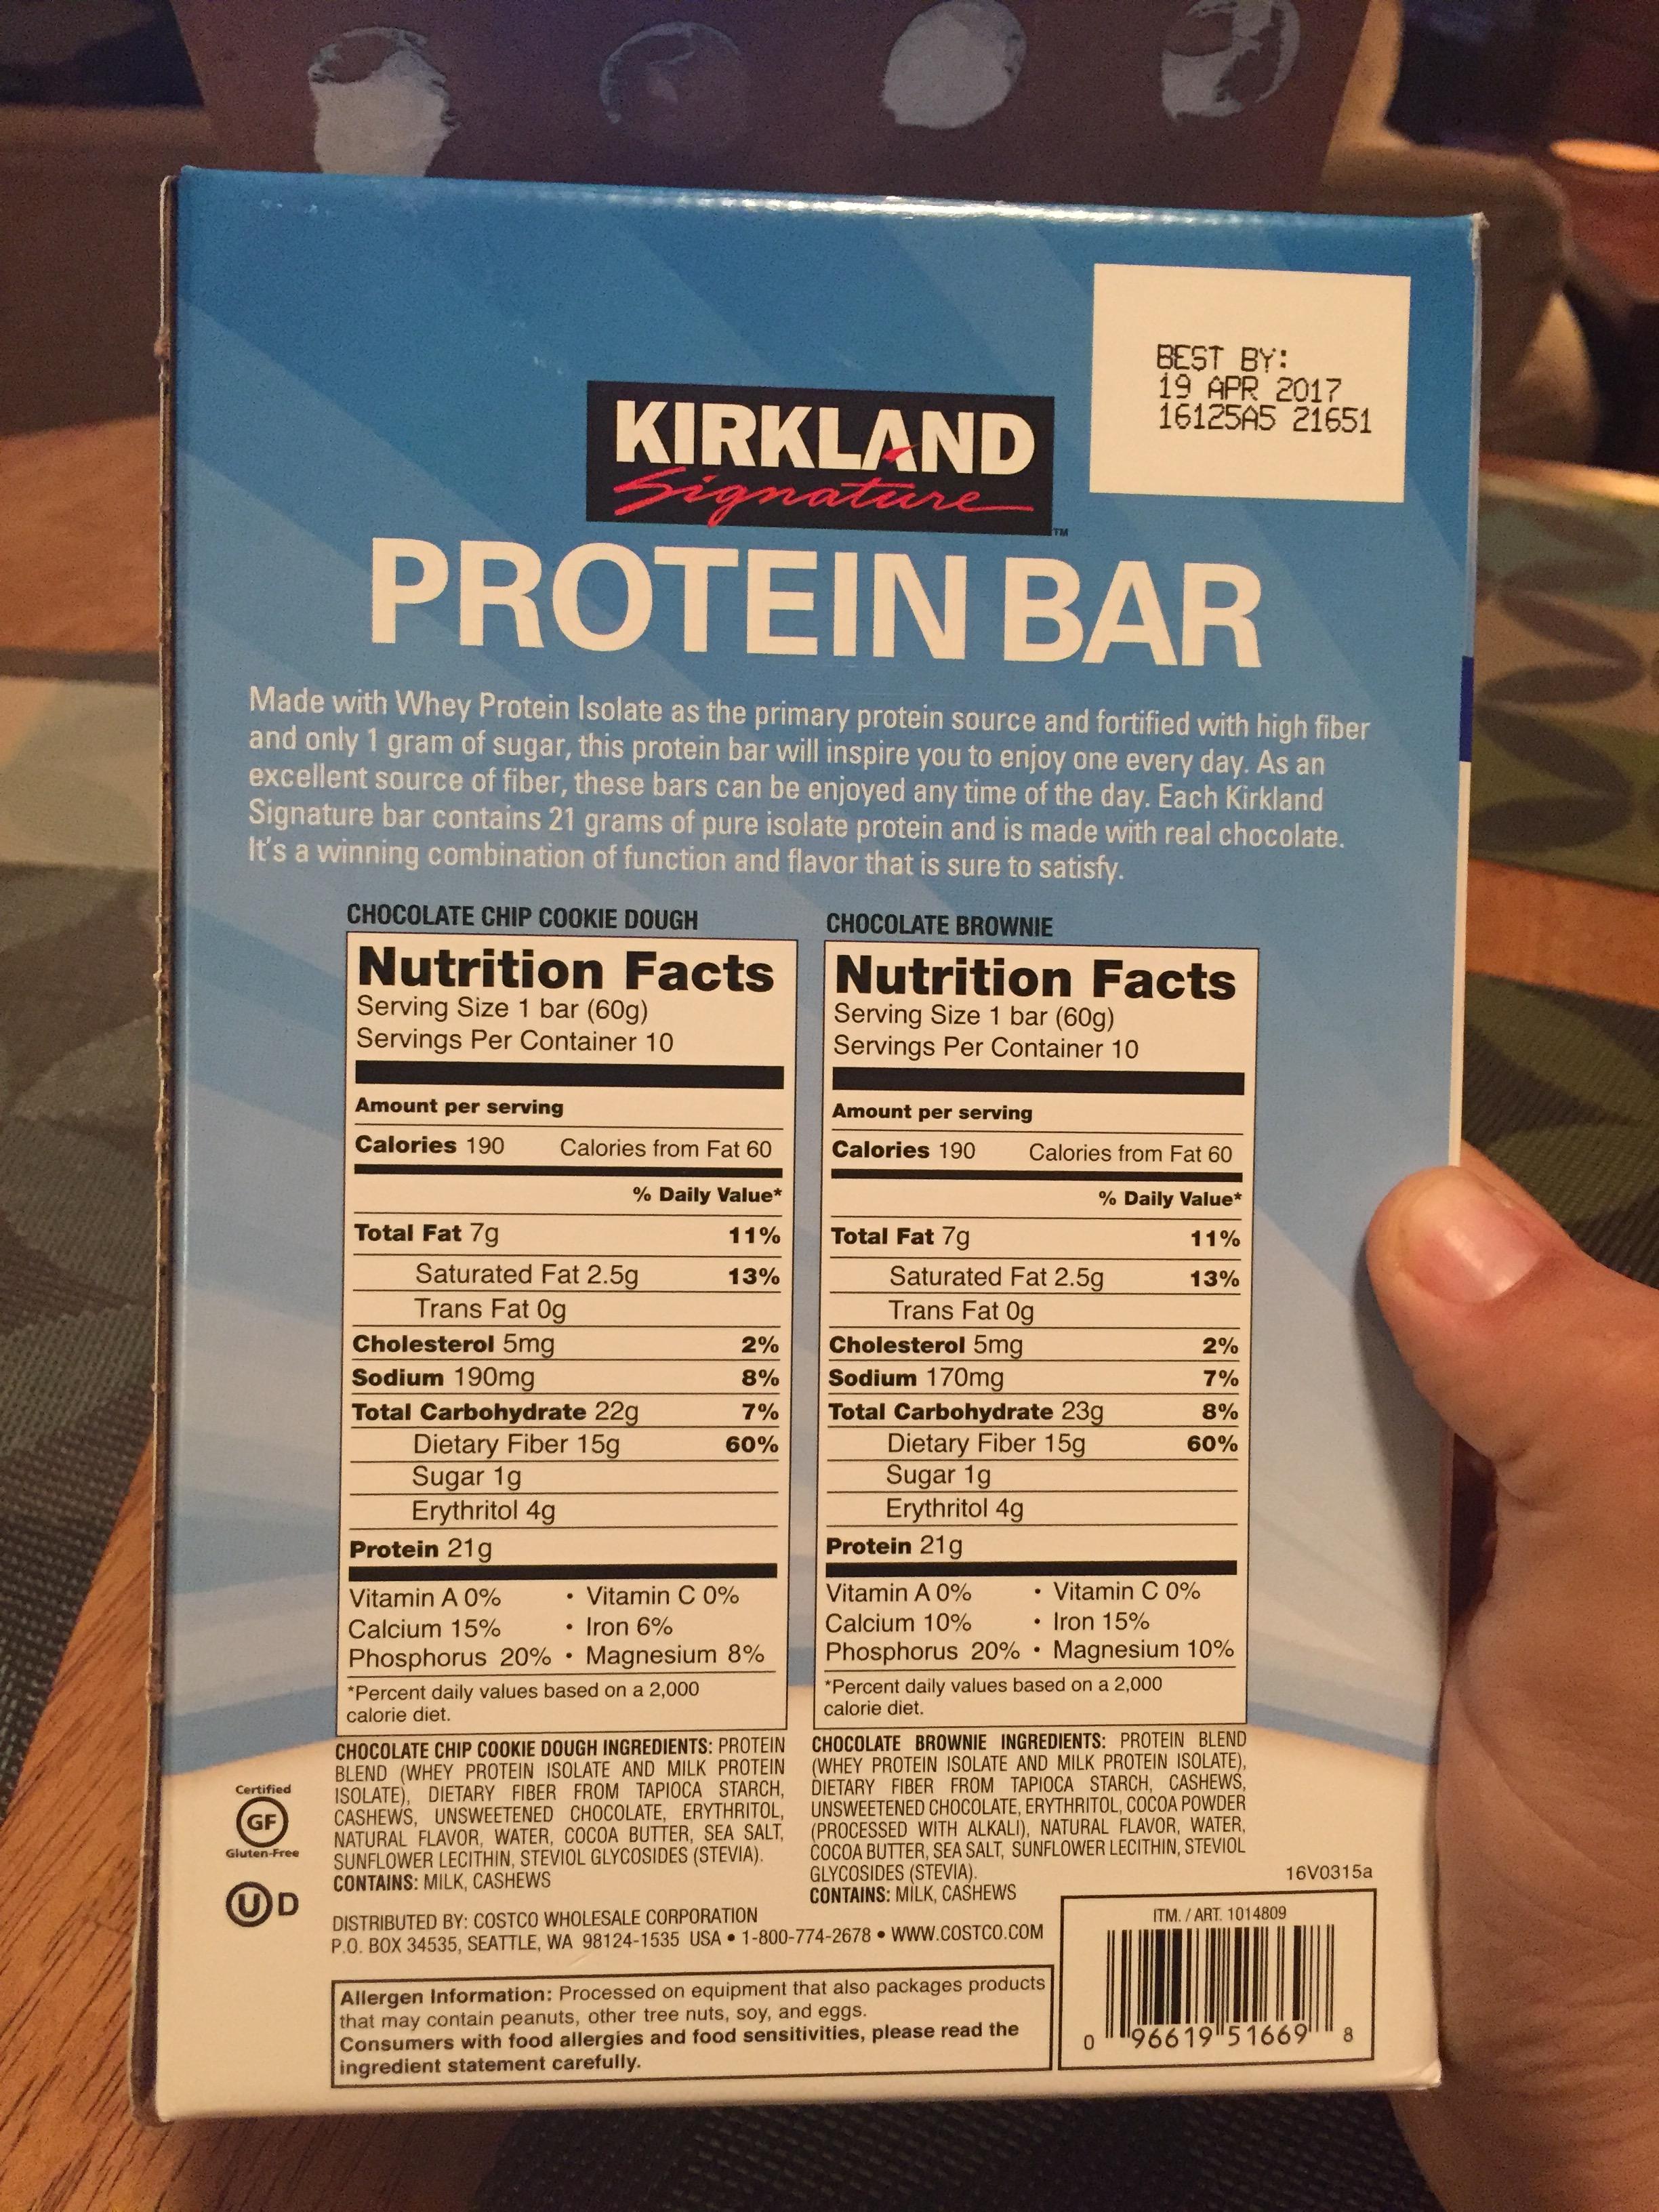 Kirkland Signature Protein Bars - Bodybuilding.com Forums